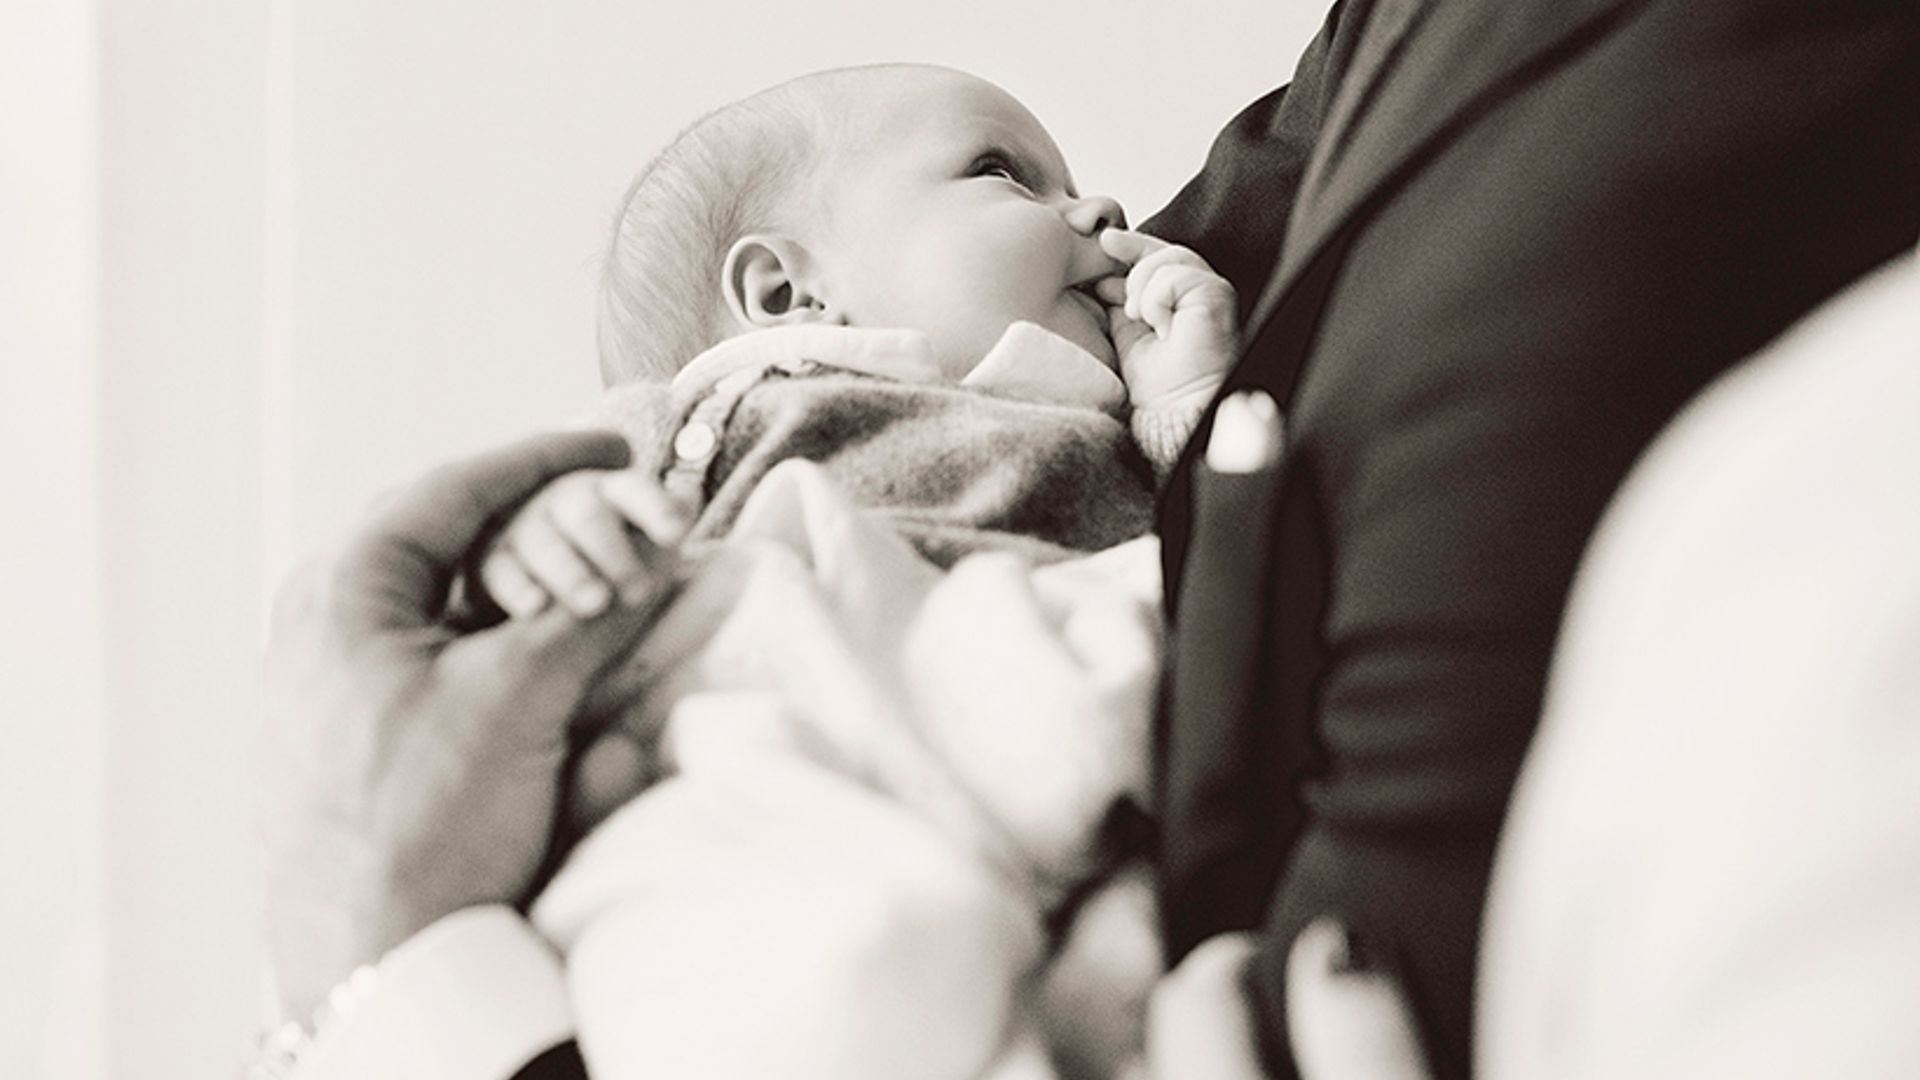 Prince Gabriel of Sweden's christening details revealed — plus tender new photo!